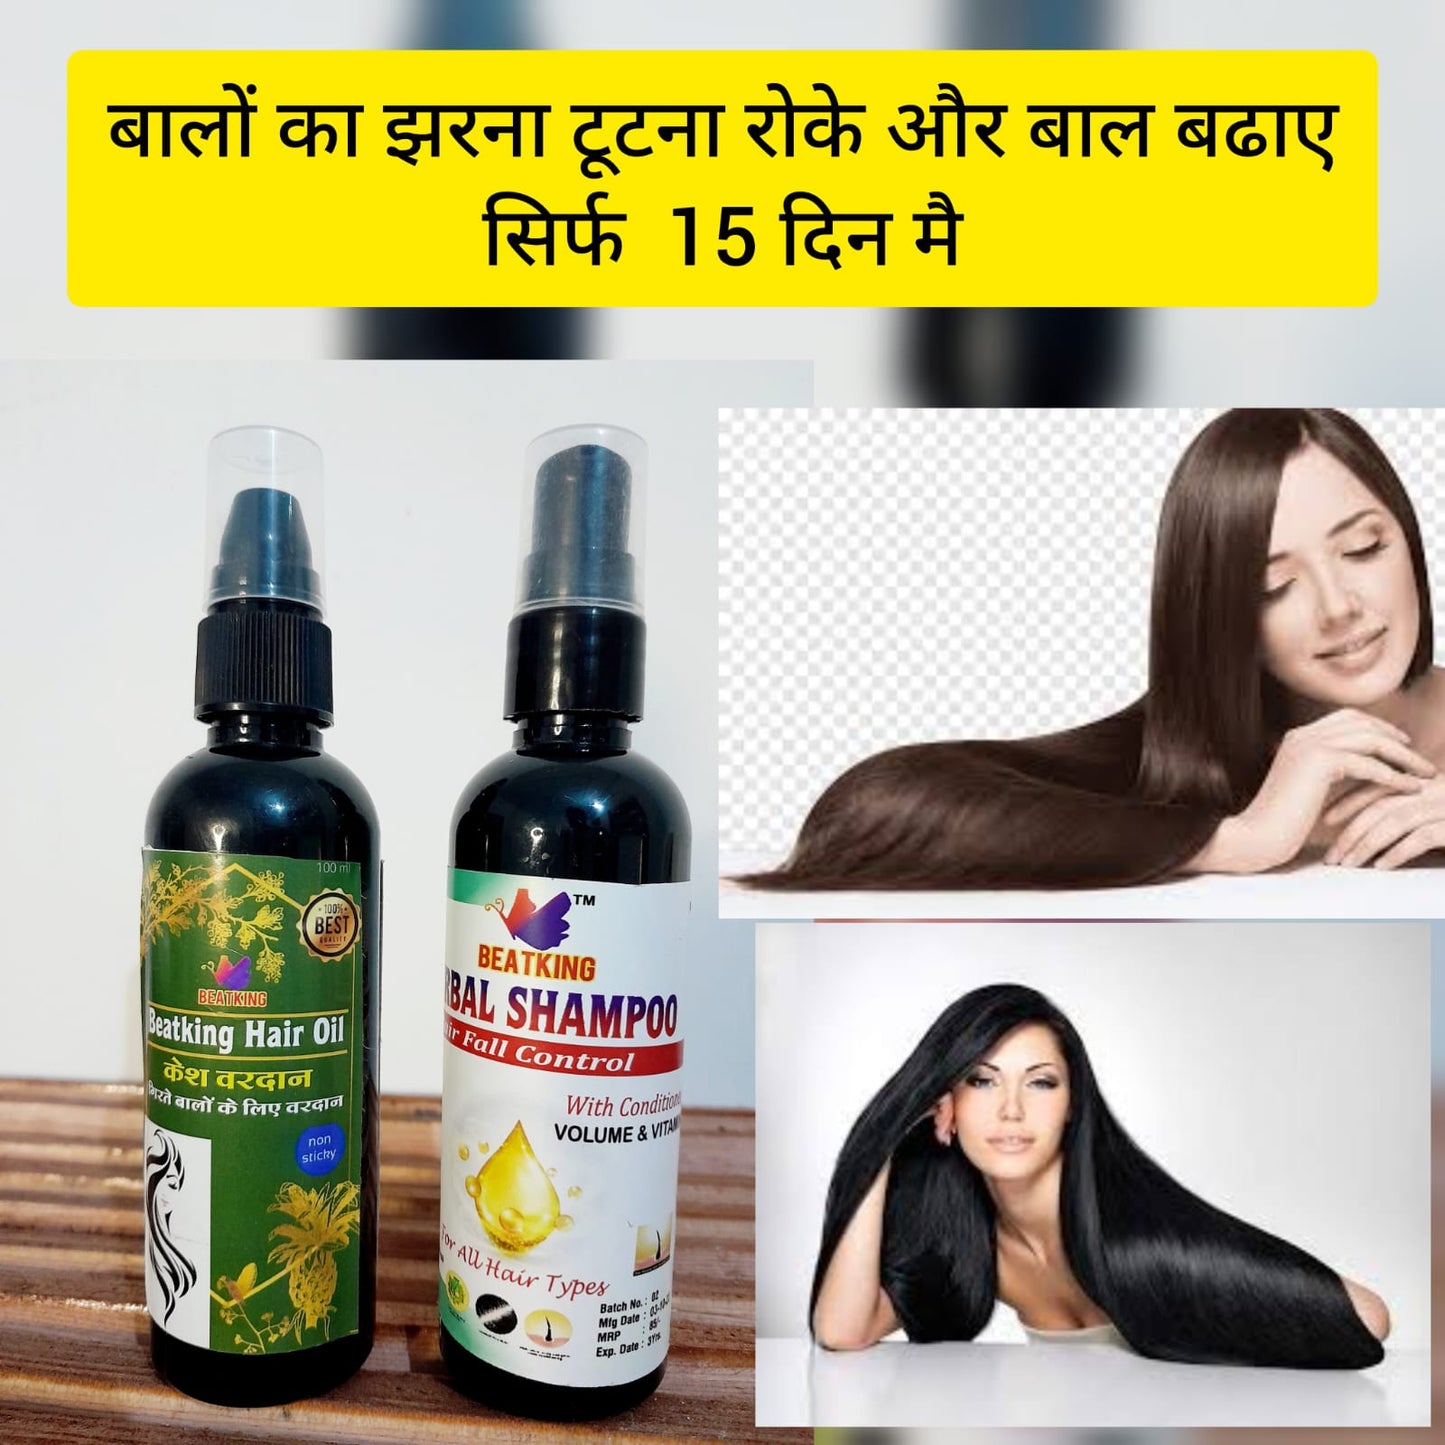 Beatking kesh vardaan hair oil and shampoo combo pack Reduces Hair Fall And Grows New Hair, 100% Ayurvedic Oil, 100 ml